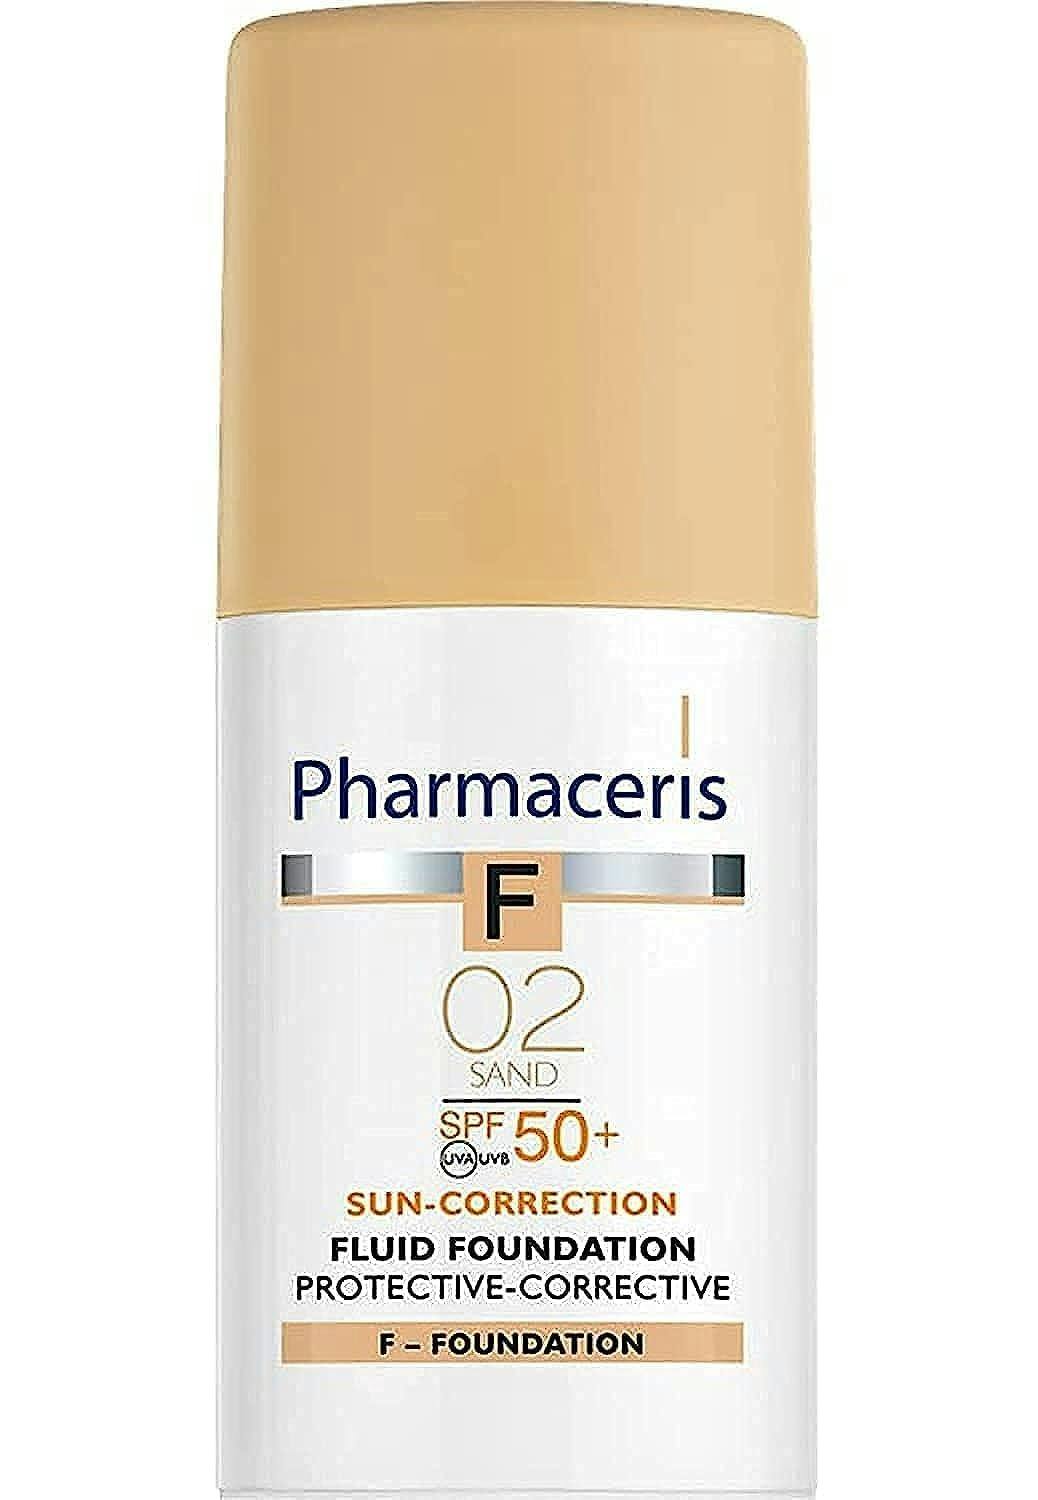 Pharmaceris SPF 50+ protective-corrective fluid foundation Сонцезахисний флюїд